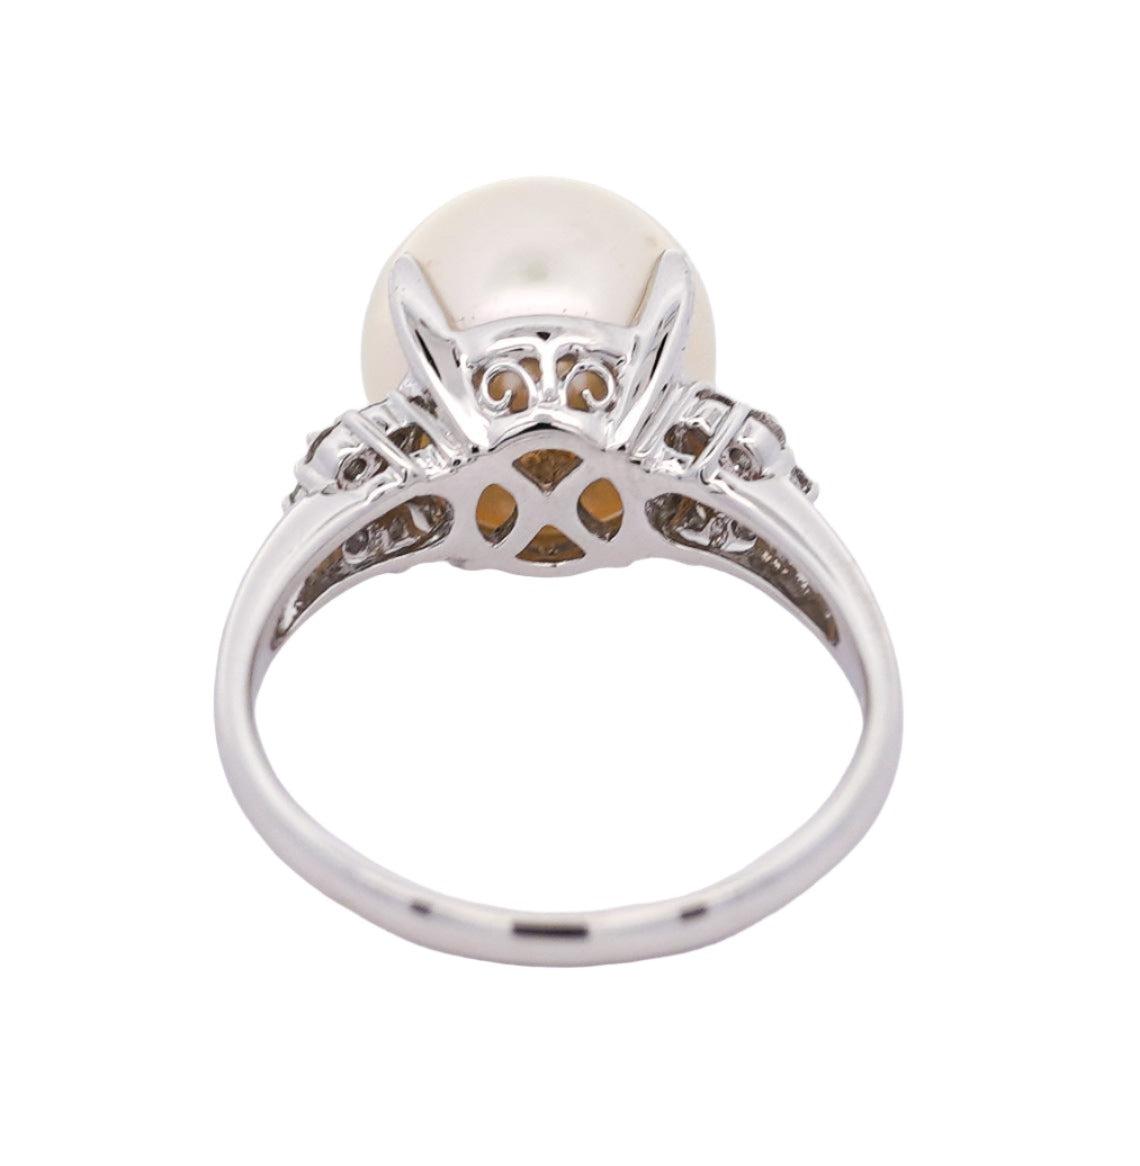 11mm White Cultured Pearl and Round Cut Diamonds in Filigree Platinum Ring